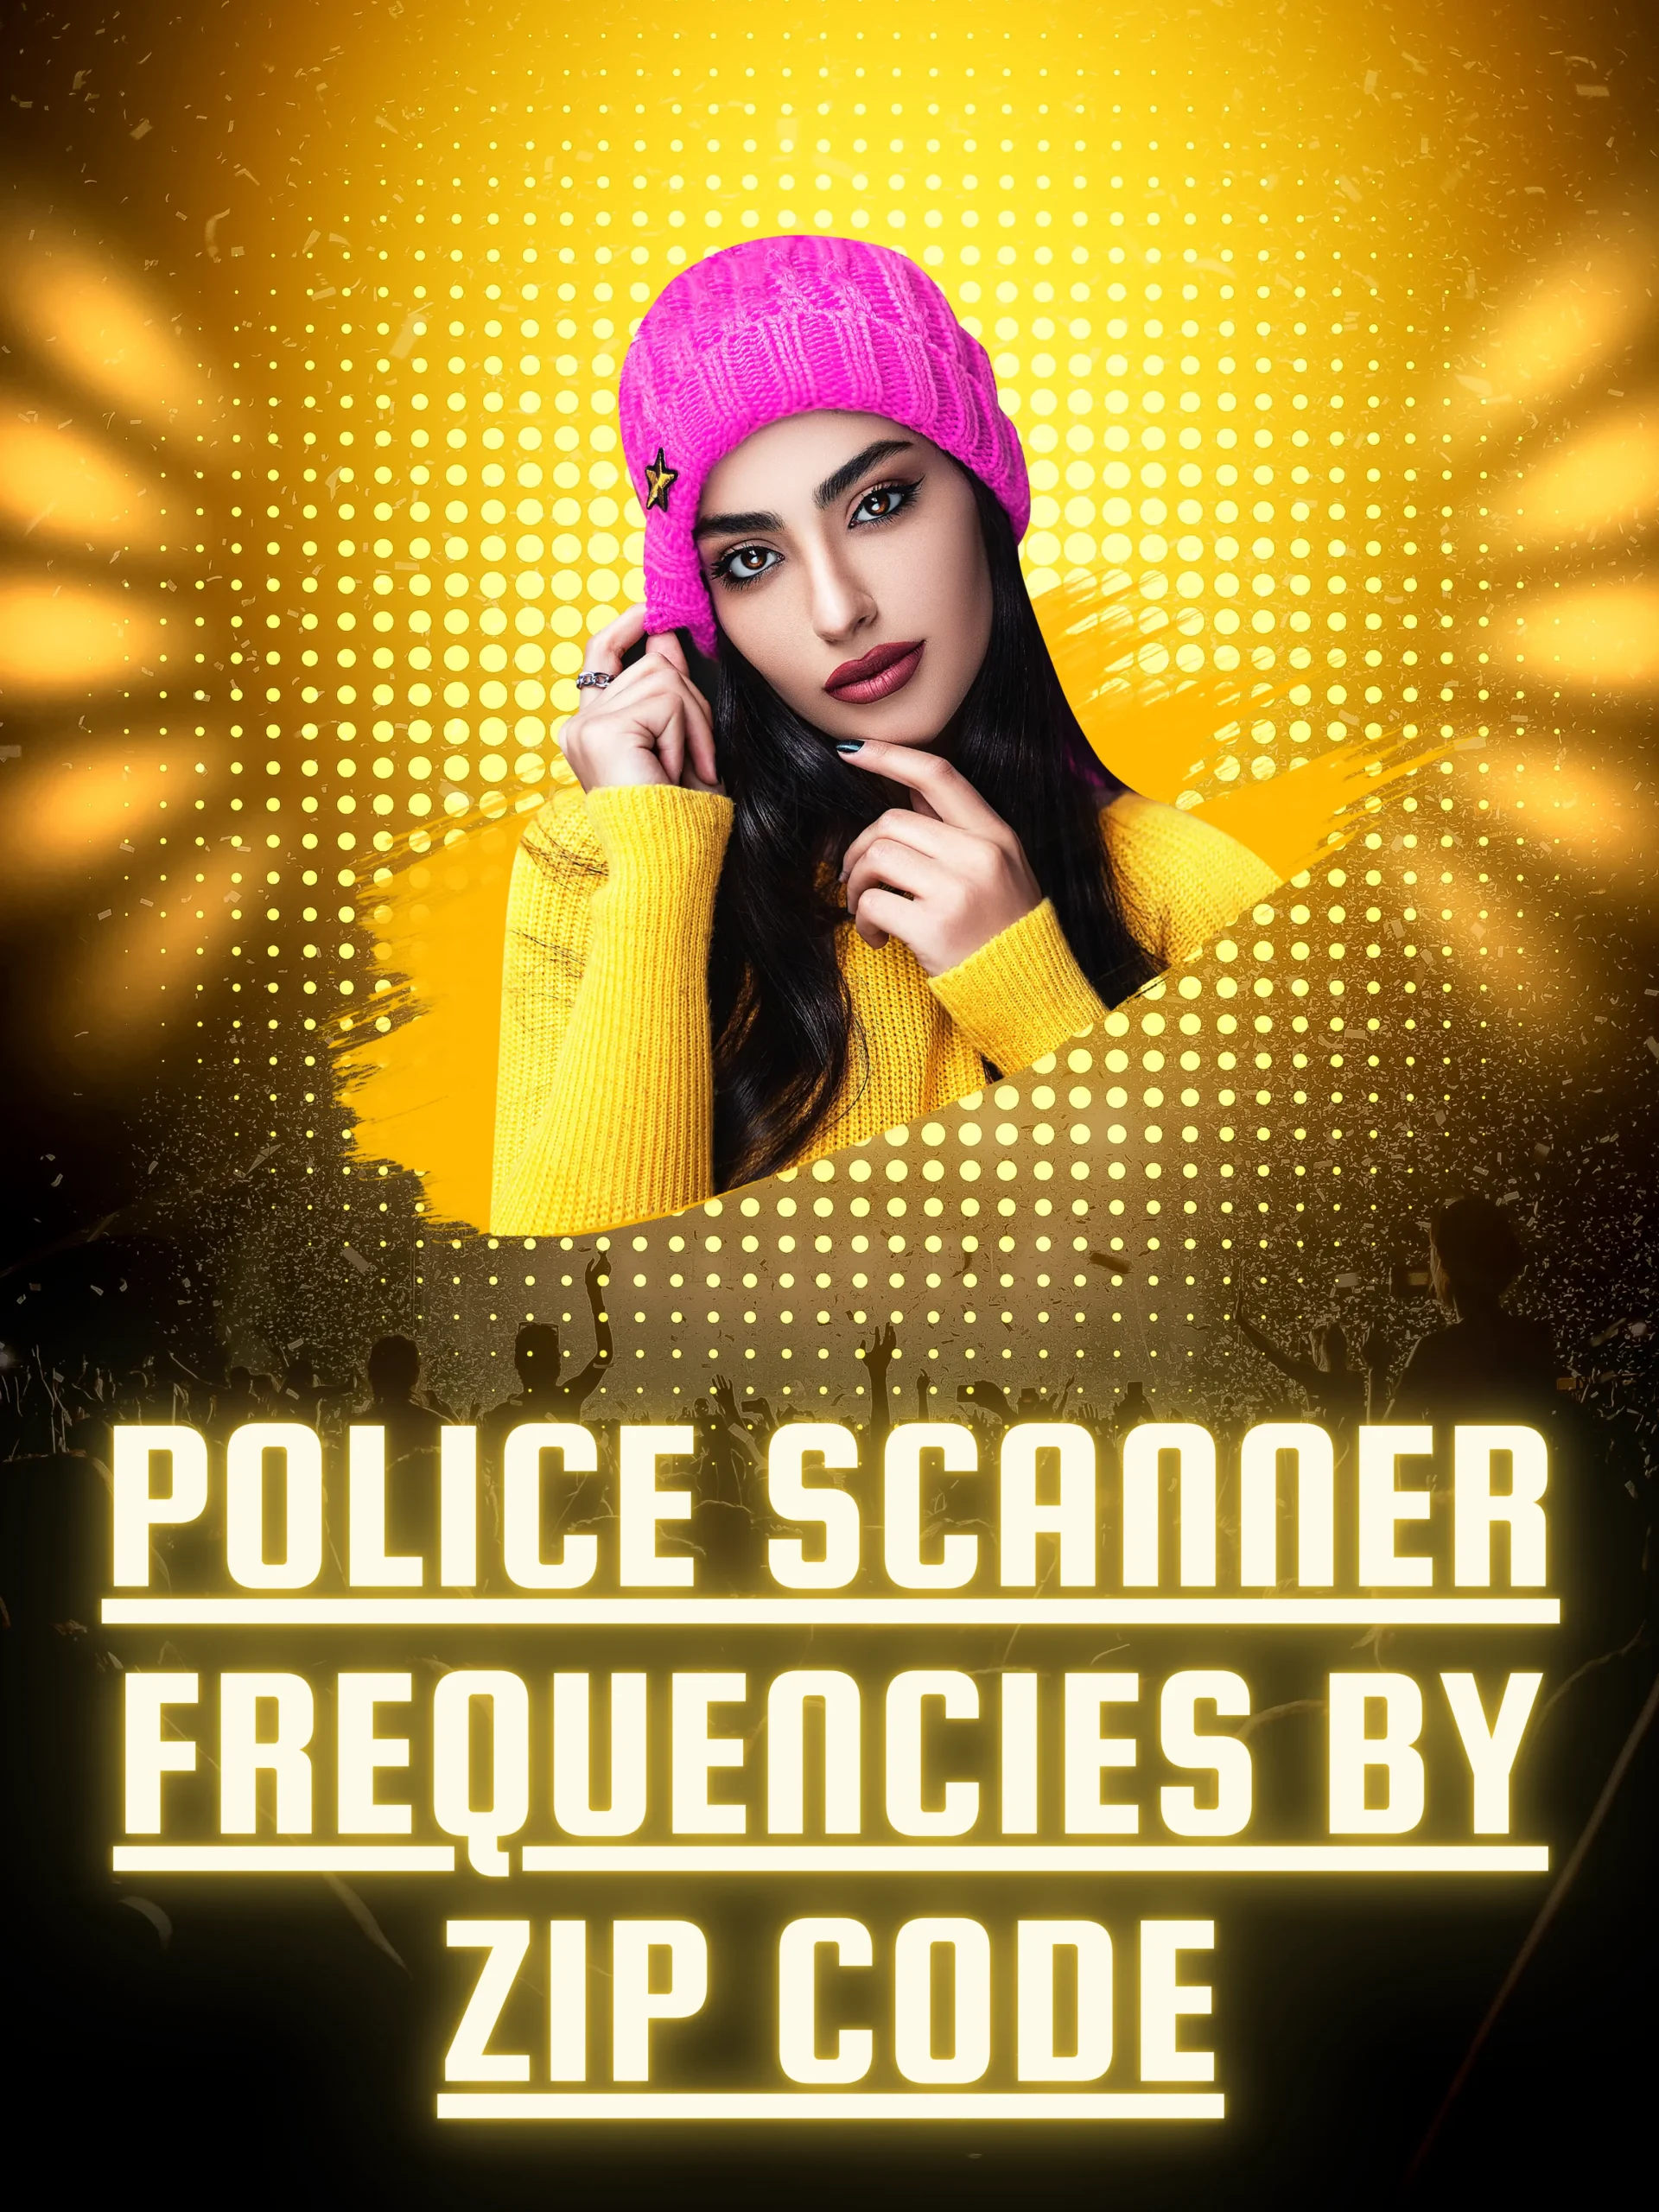 Police Scanner Frequencies by Zip Code